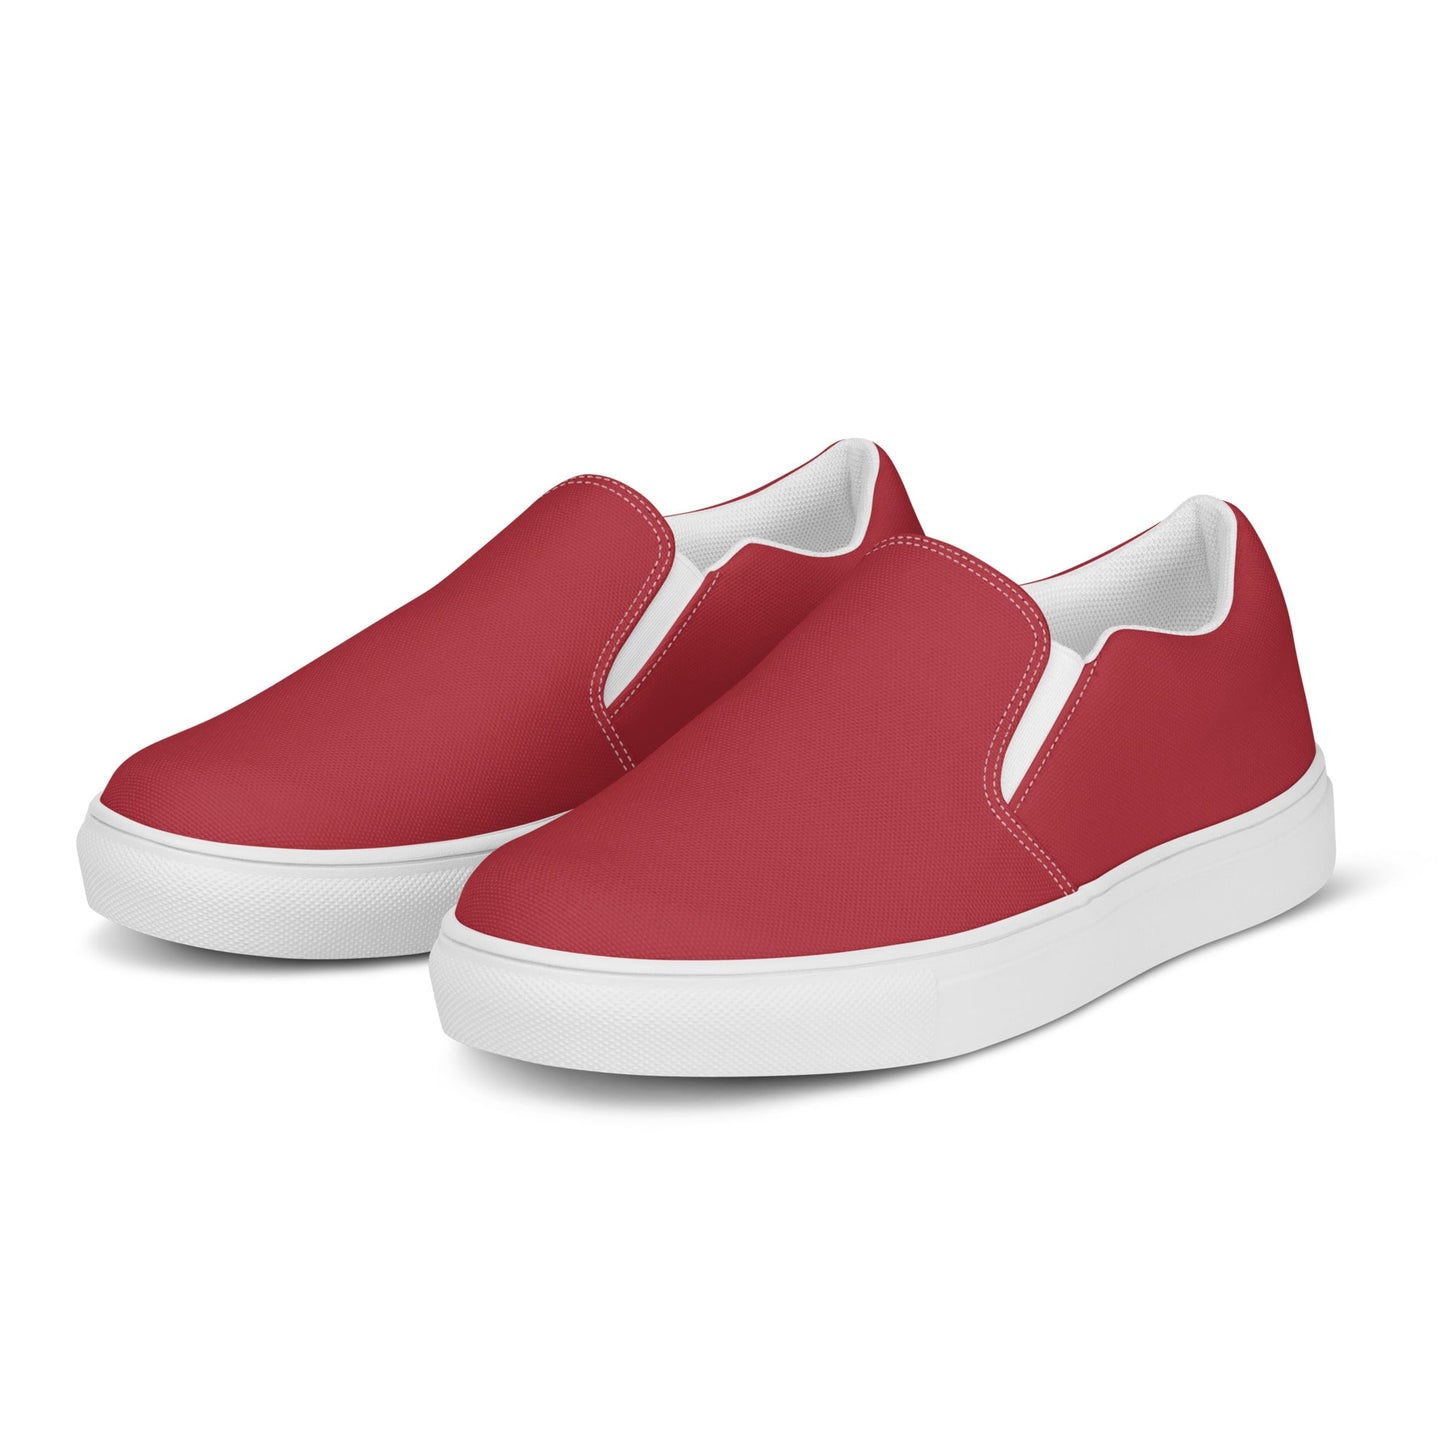 klasneakers Men’s slip-on canvas shoes - Red